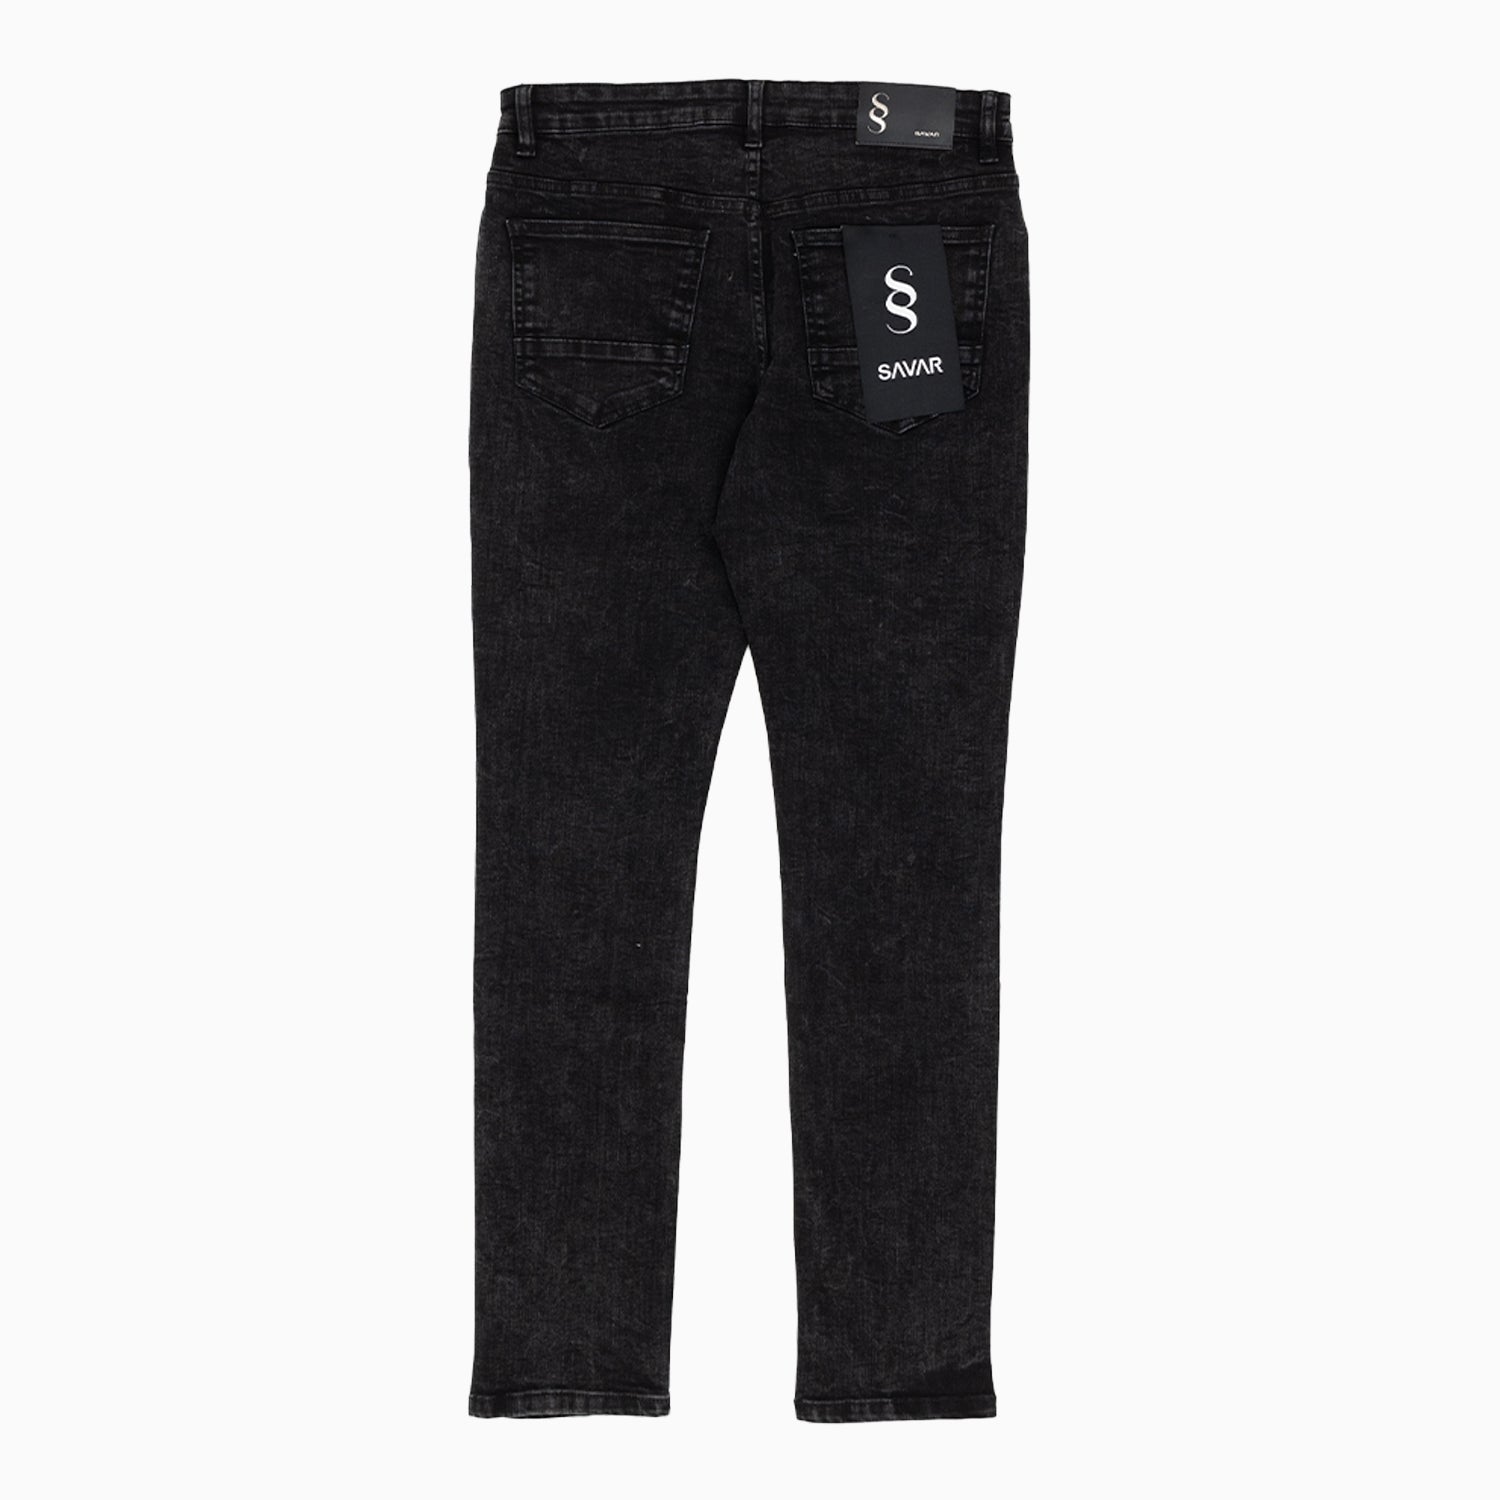 mens-savar-black-abstract-slim-denim-jeans-pant-sjb0010-blkabs